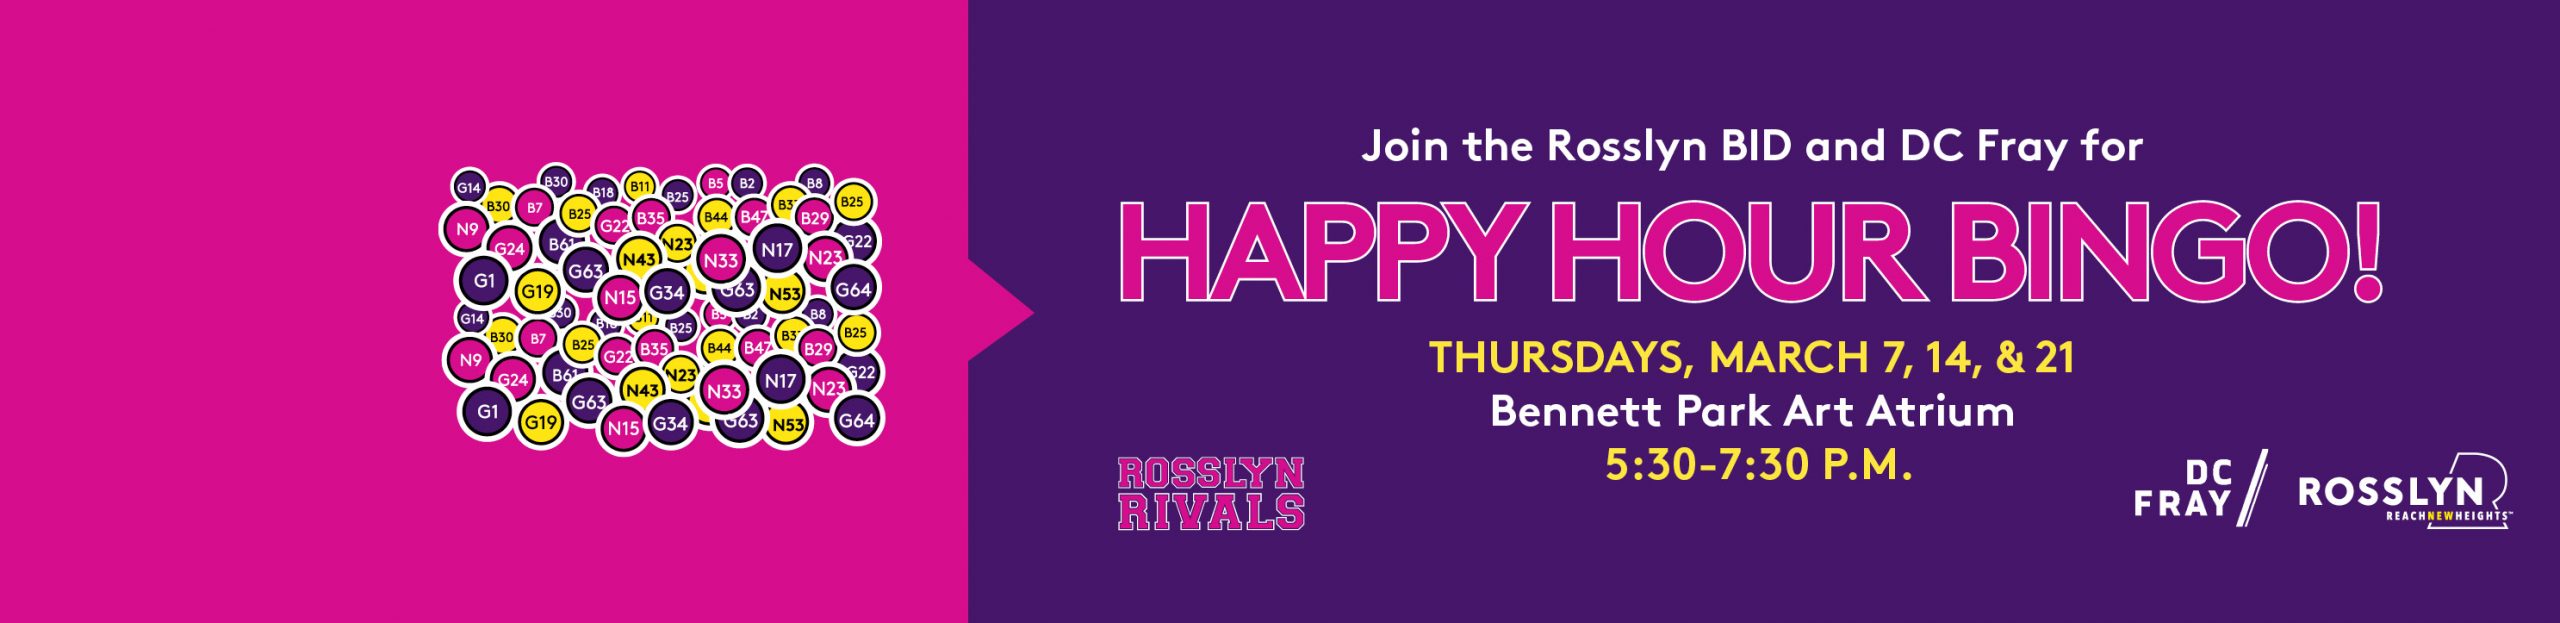 Rosslyn BID Happy Hour Bingo Series